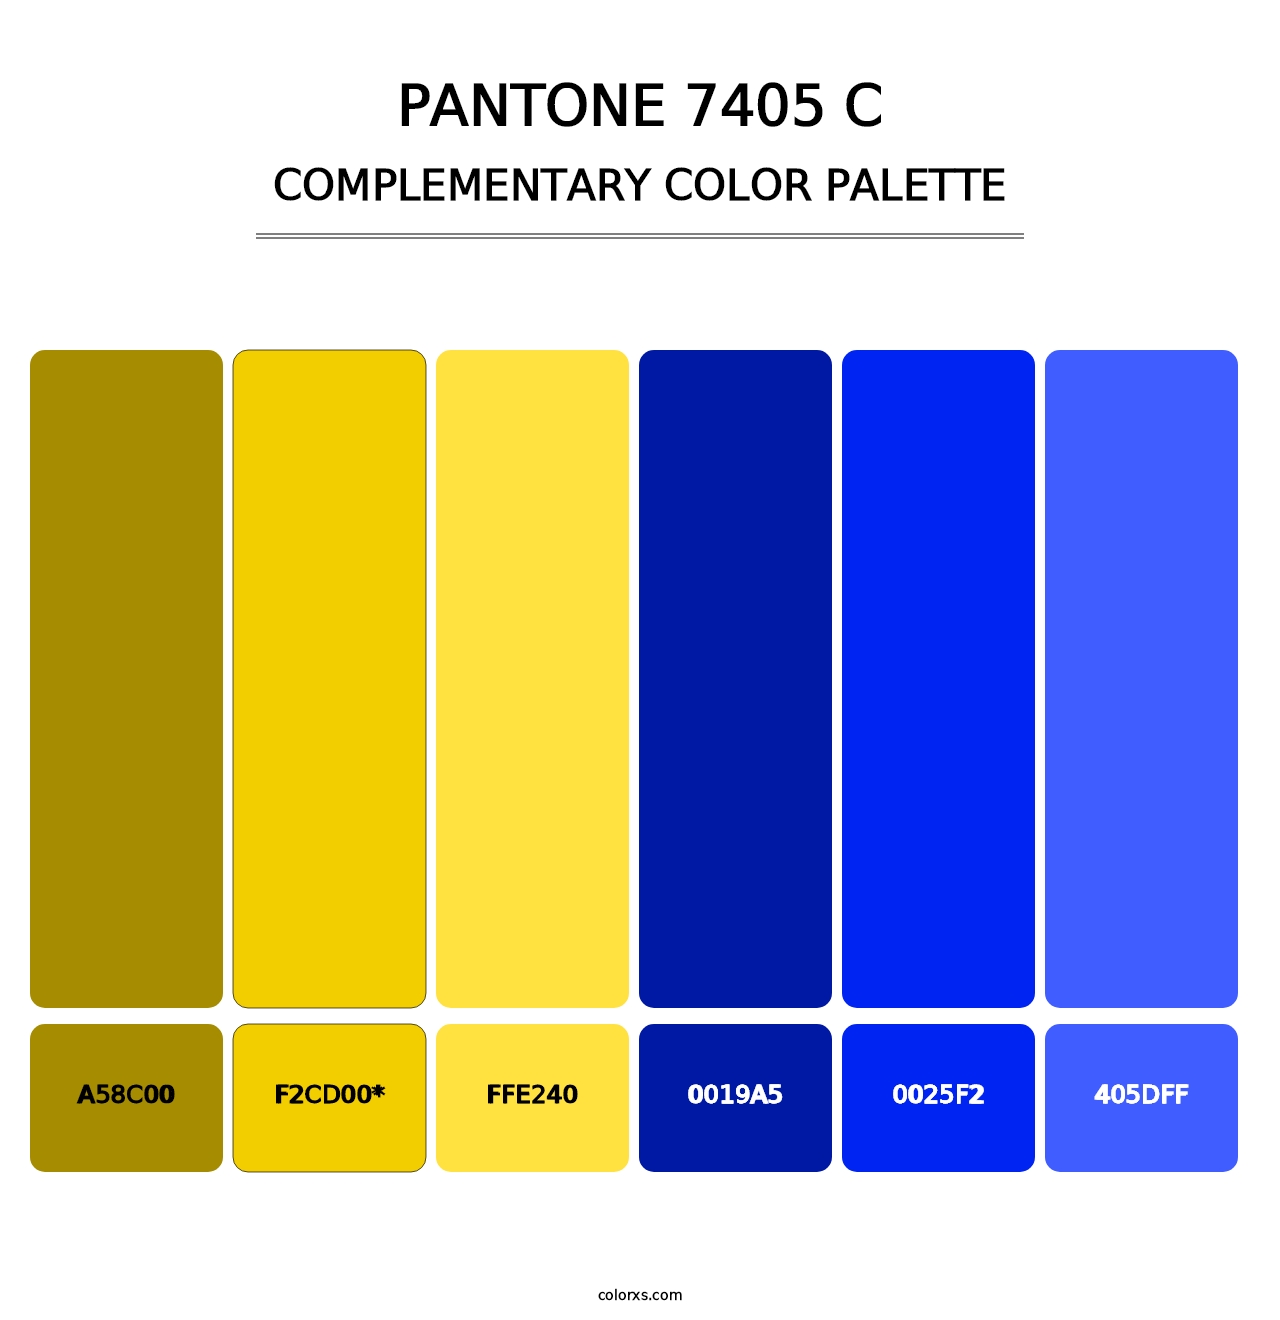 PANTONE 7405 C - Complementary Color Palette